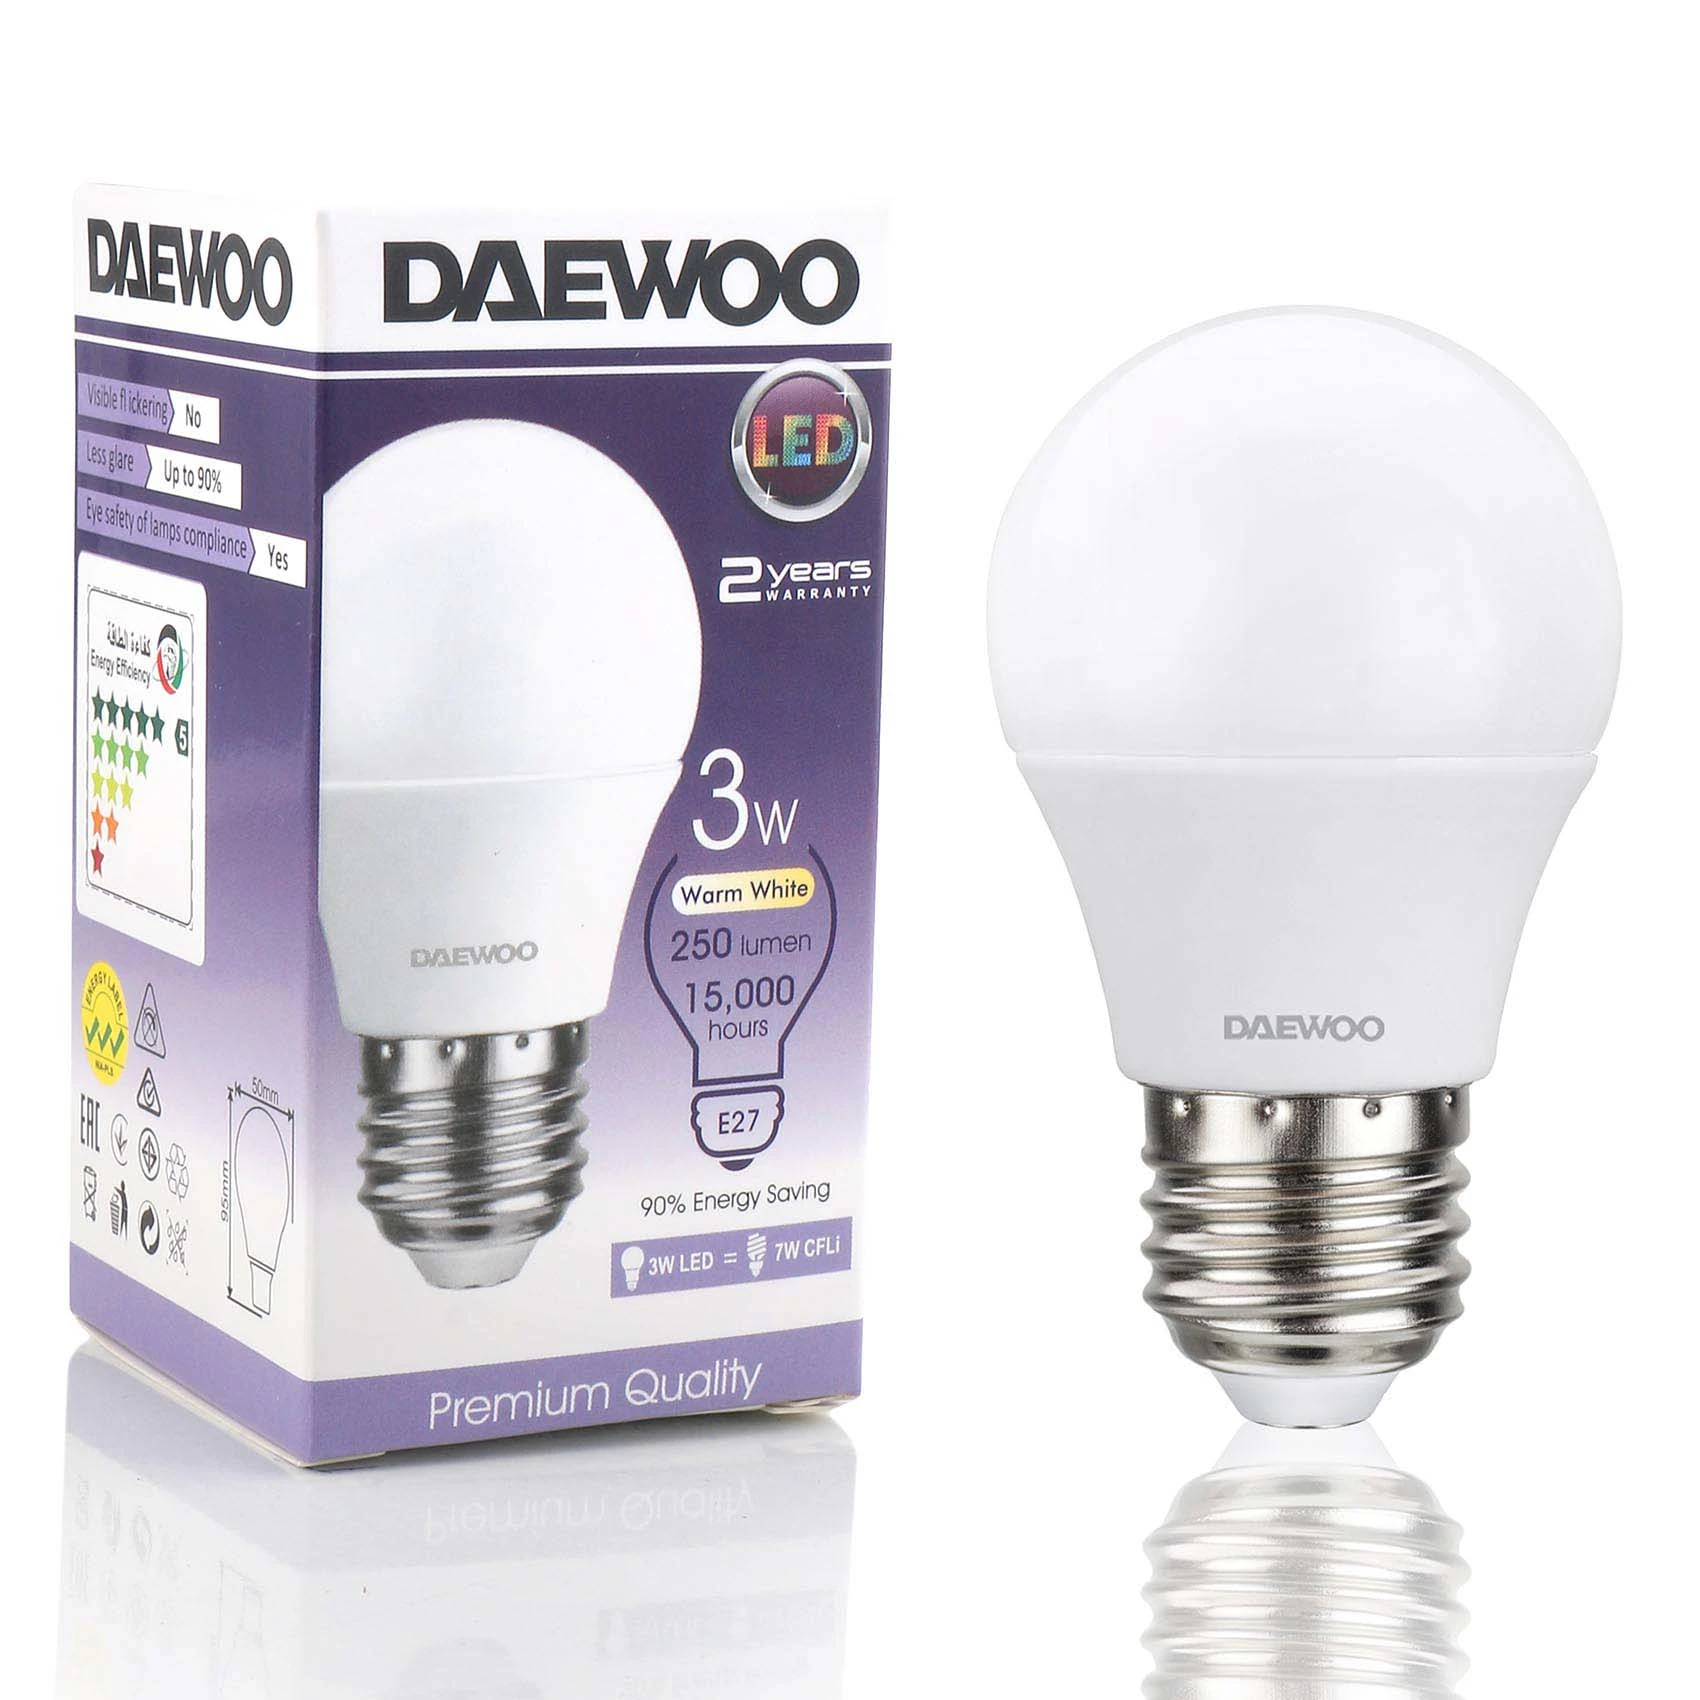 DAEWOO ENERGY SAVING LED BULB E27-3W DL2703DN WARM WHITE